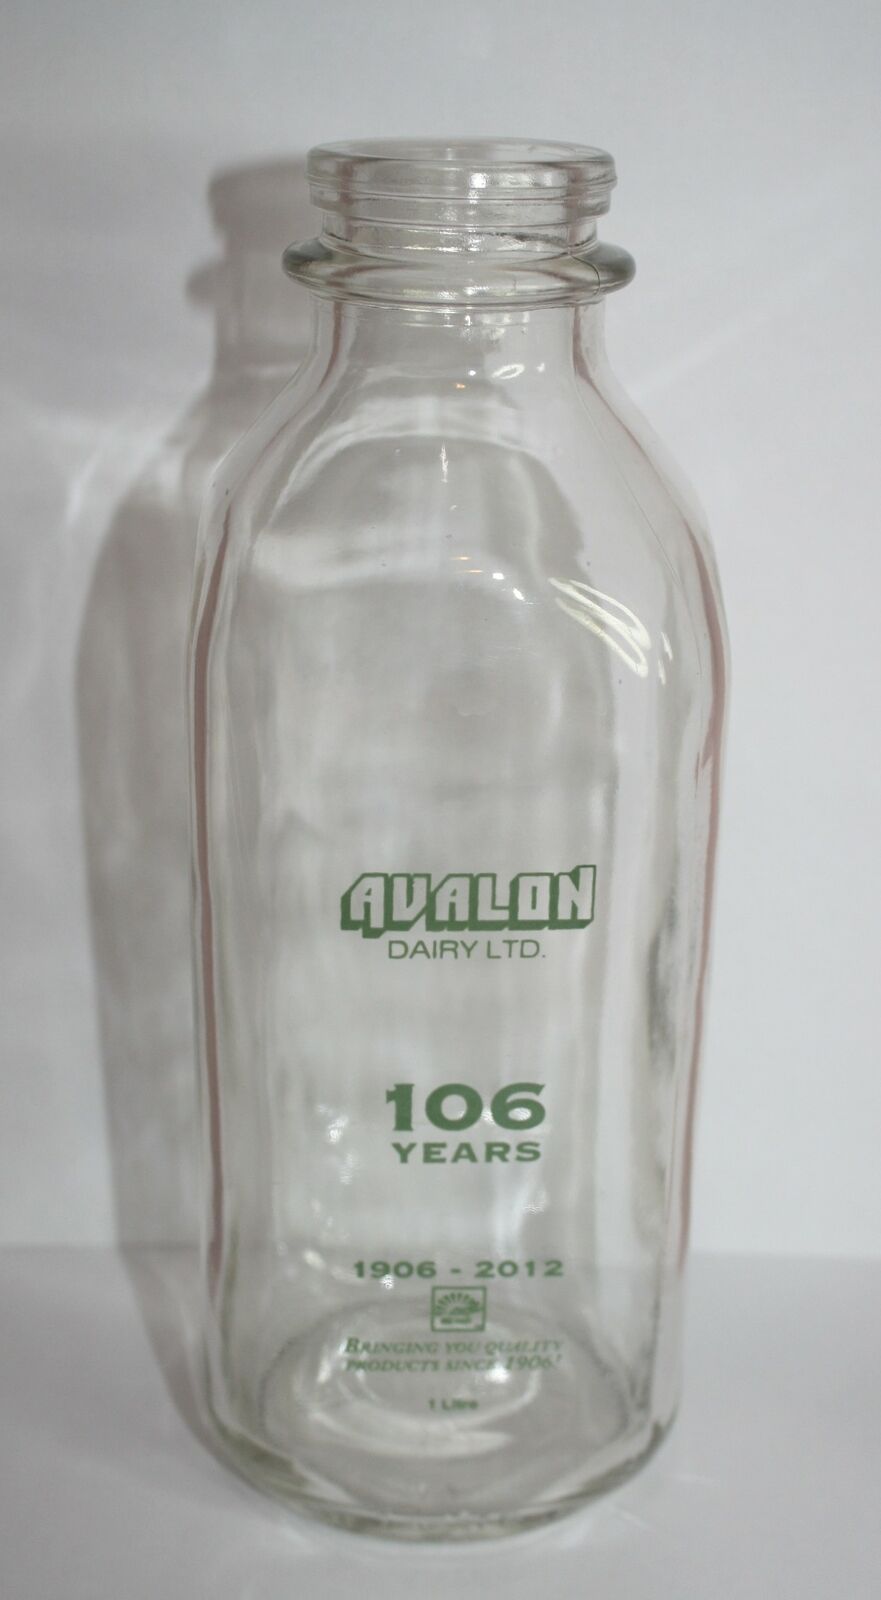 VINTAGE AVALON DAIRY LTD. MILK BOTTLE 106 YEARS 1906-2012 GREEN ACL 1 LITRE